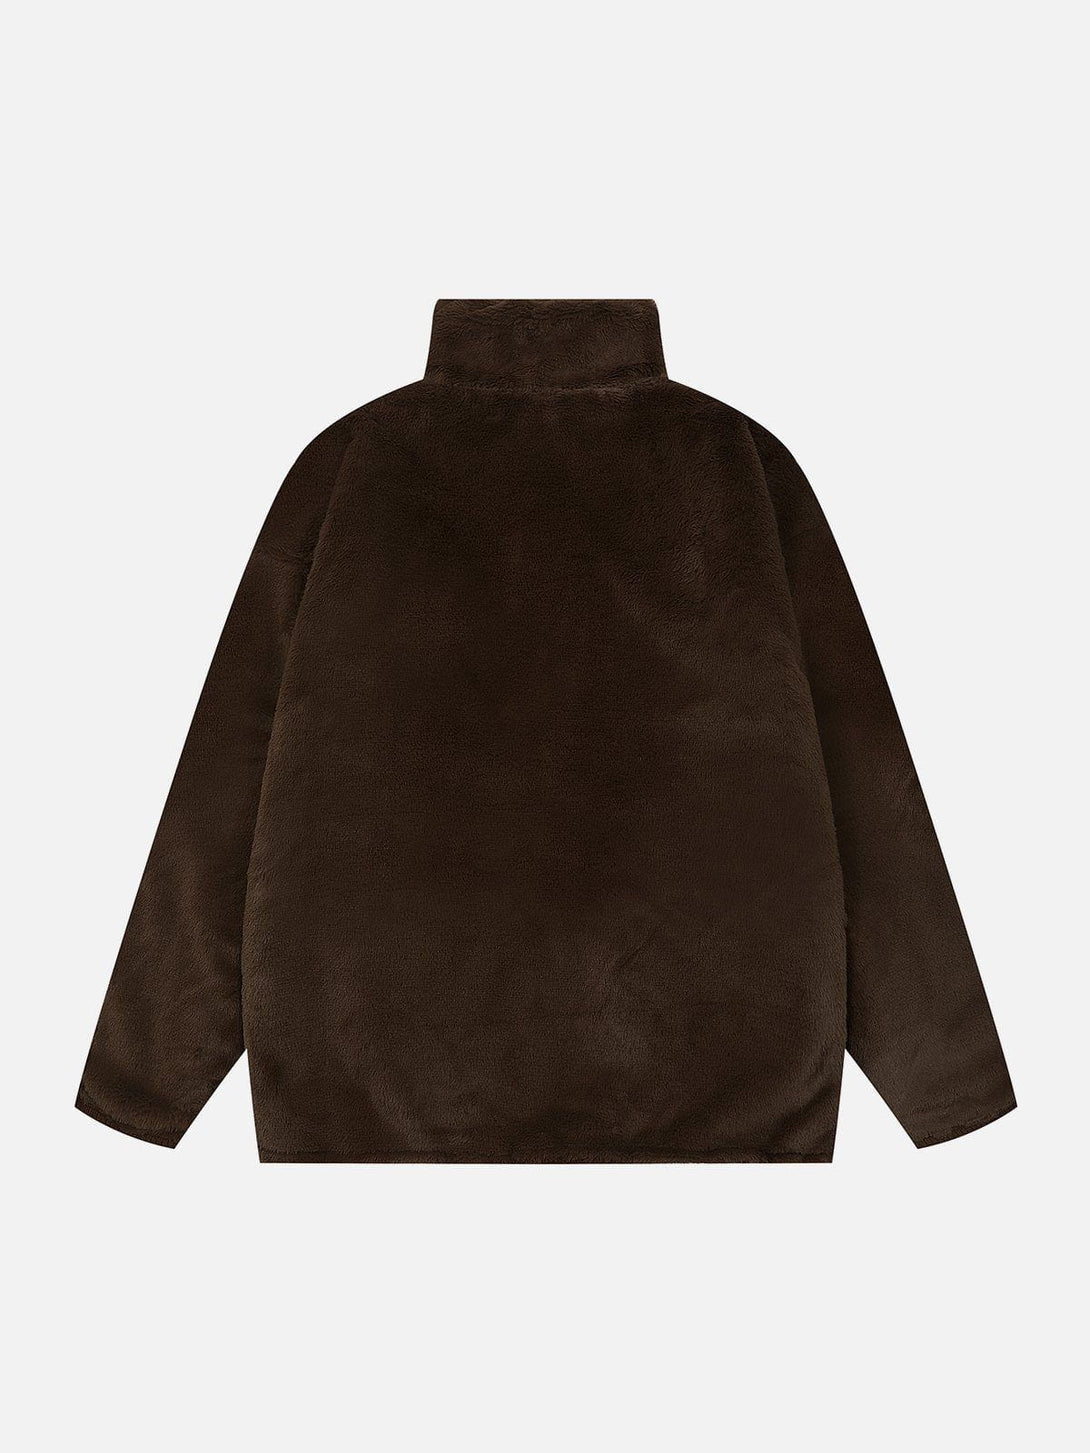 AlanBalen® - Reversible Stand Collar Knitted Winter Coat AlanBalen